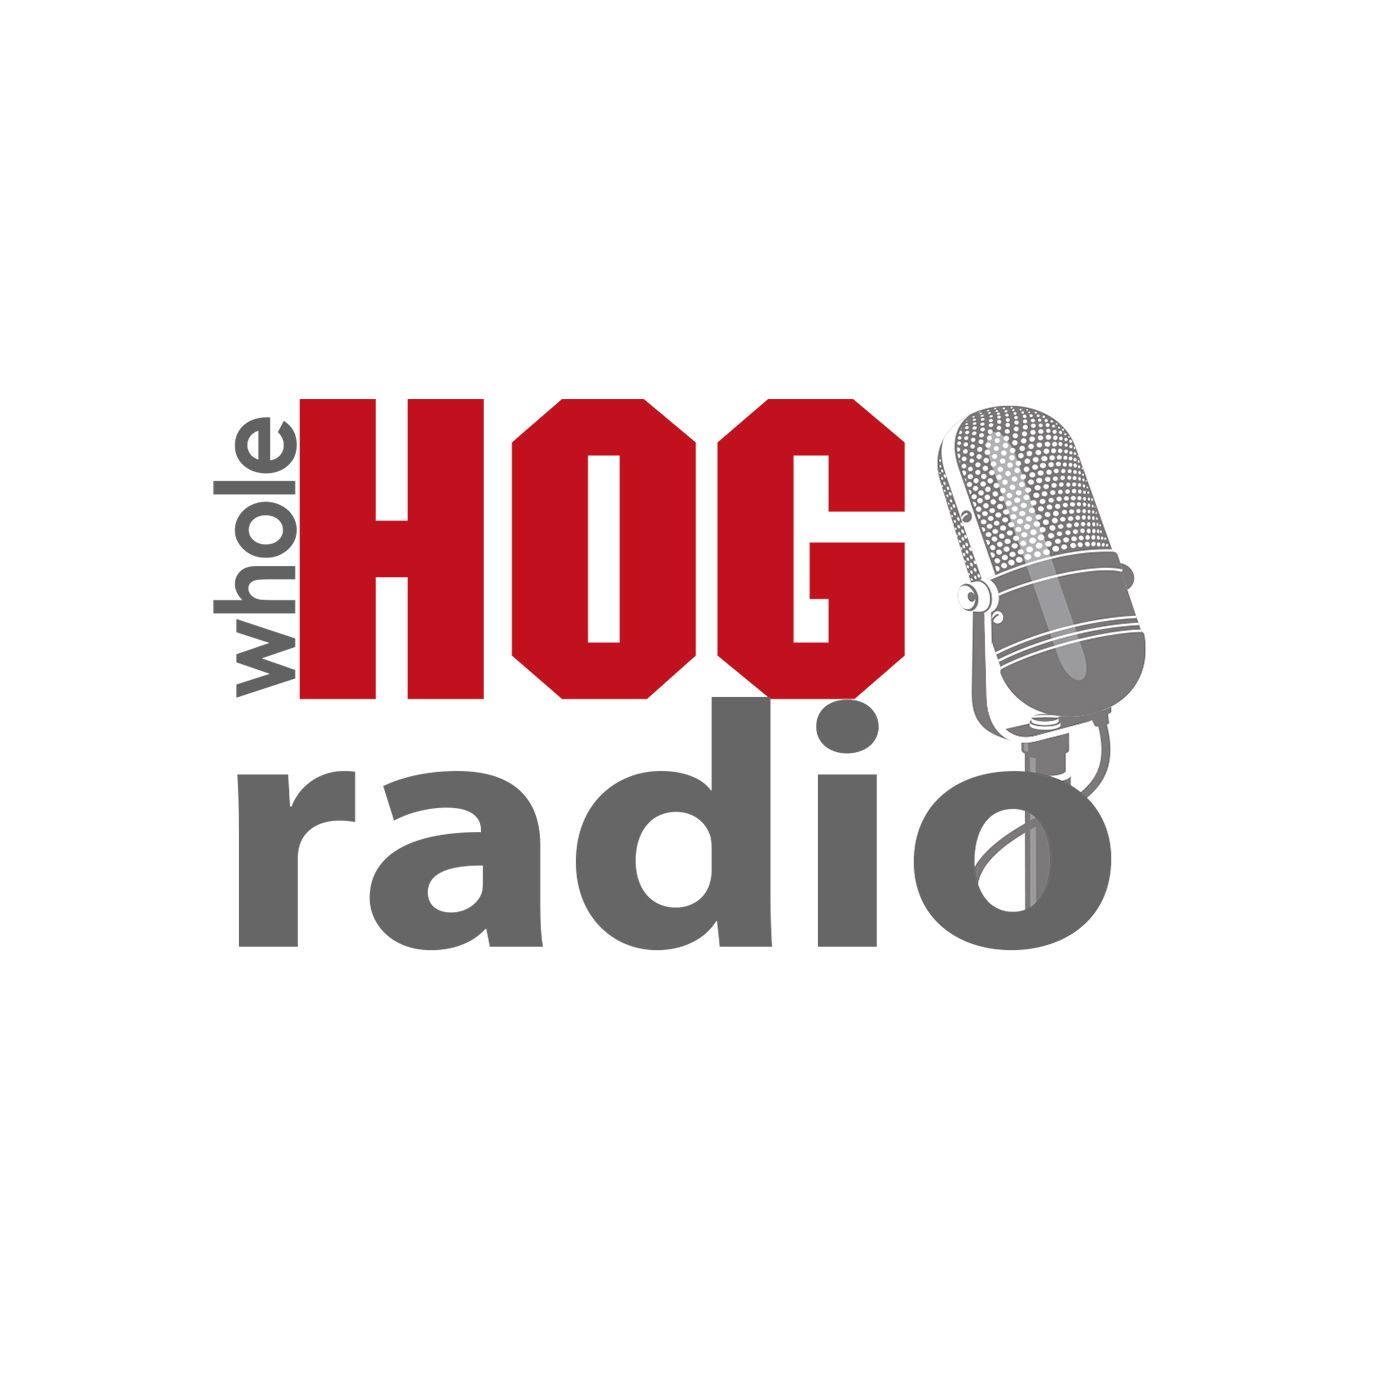 WholeHog Baseball Podcast: Recapping Week 1 with Clay Henry, plus Joe Healy of Baseball America